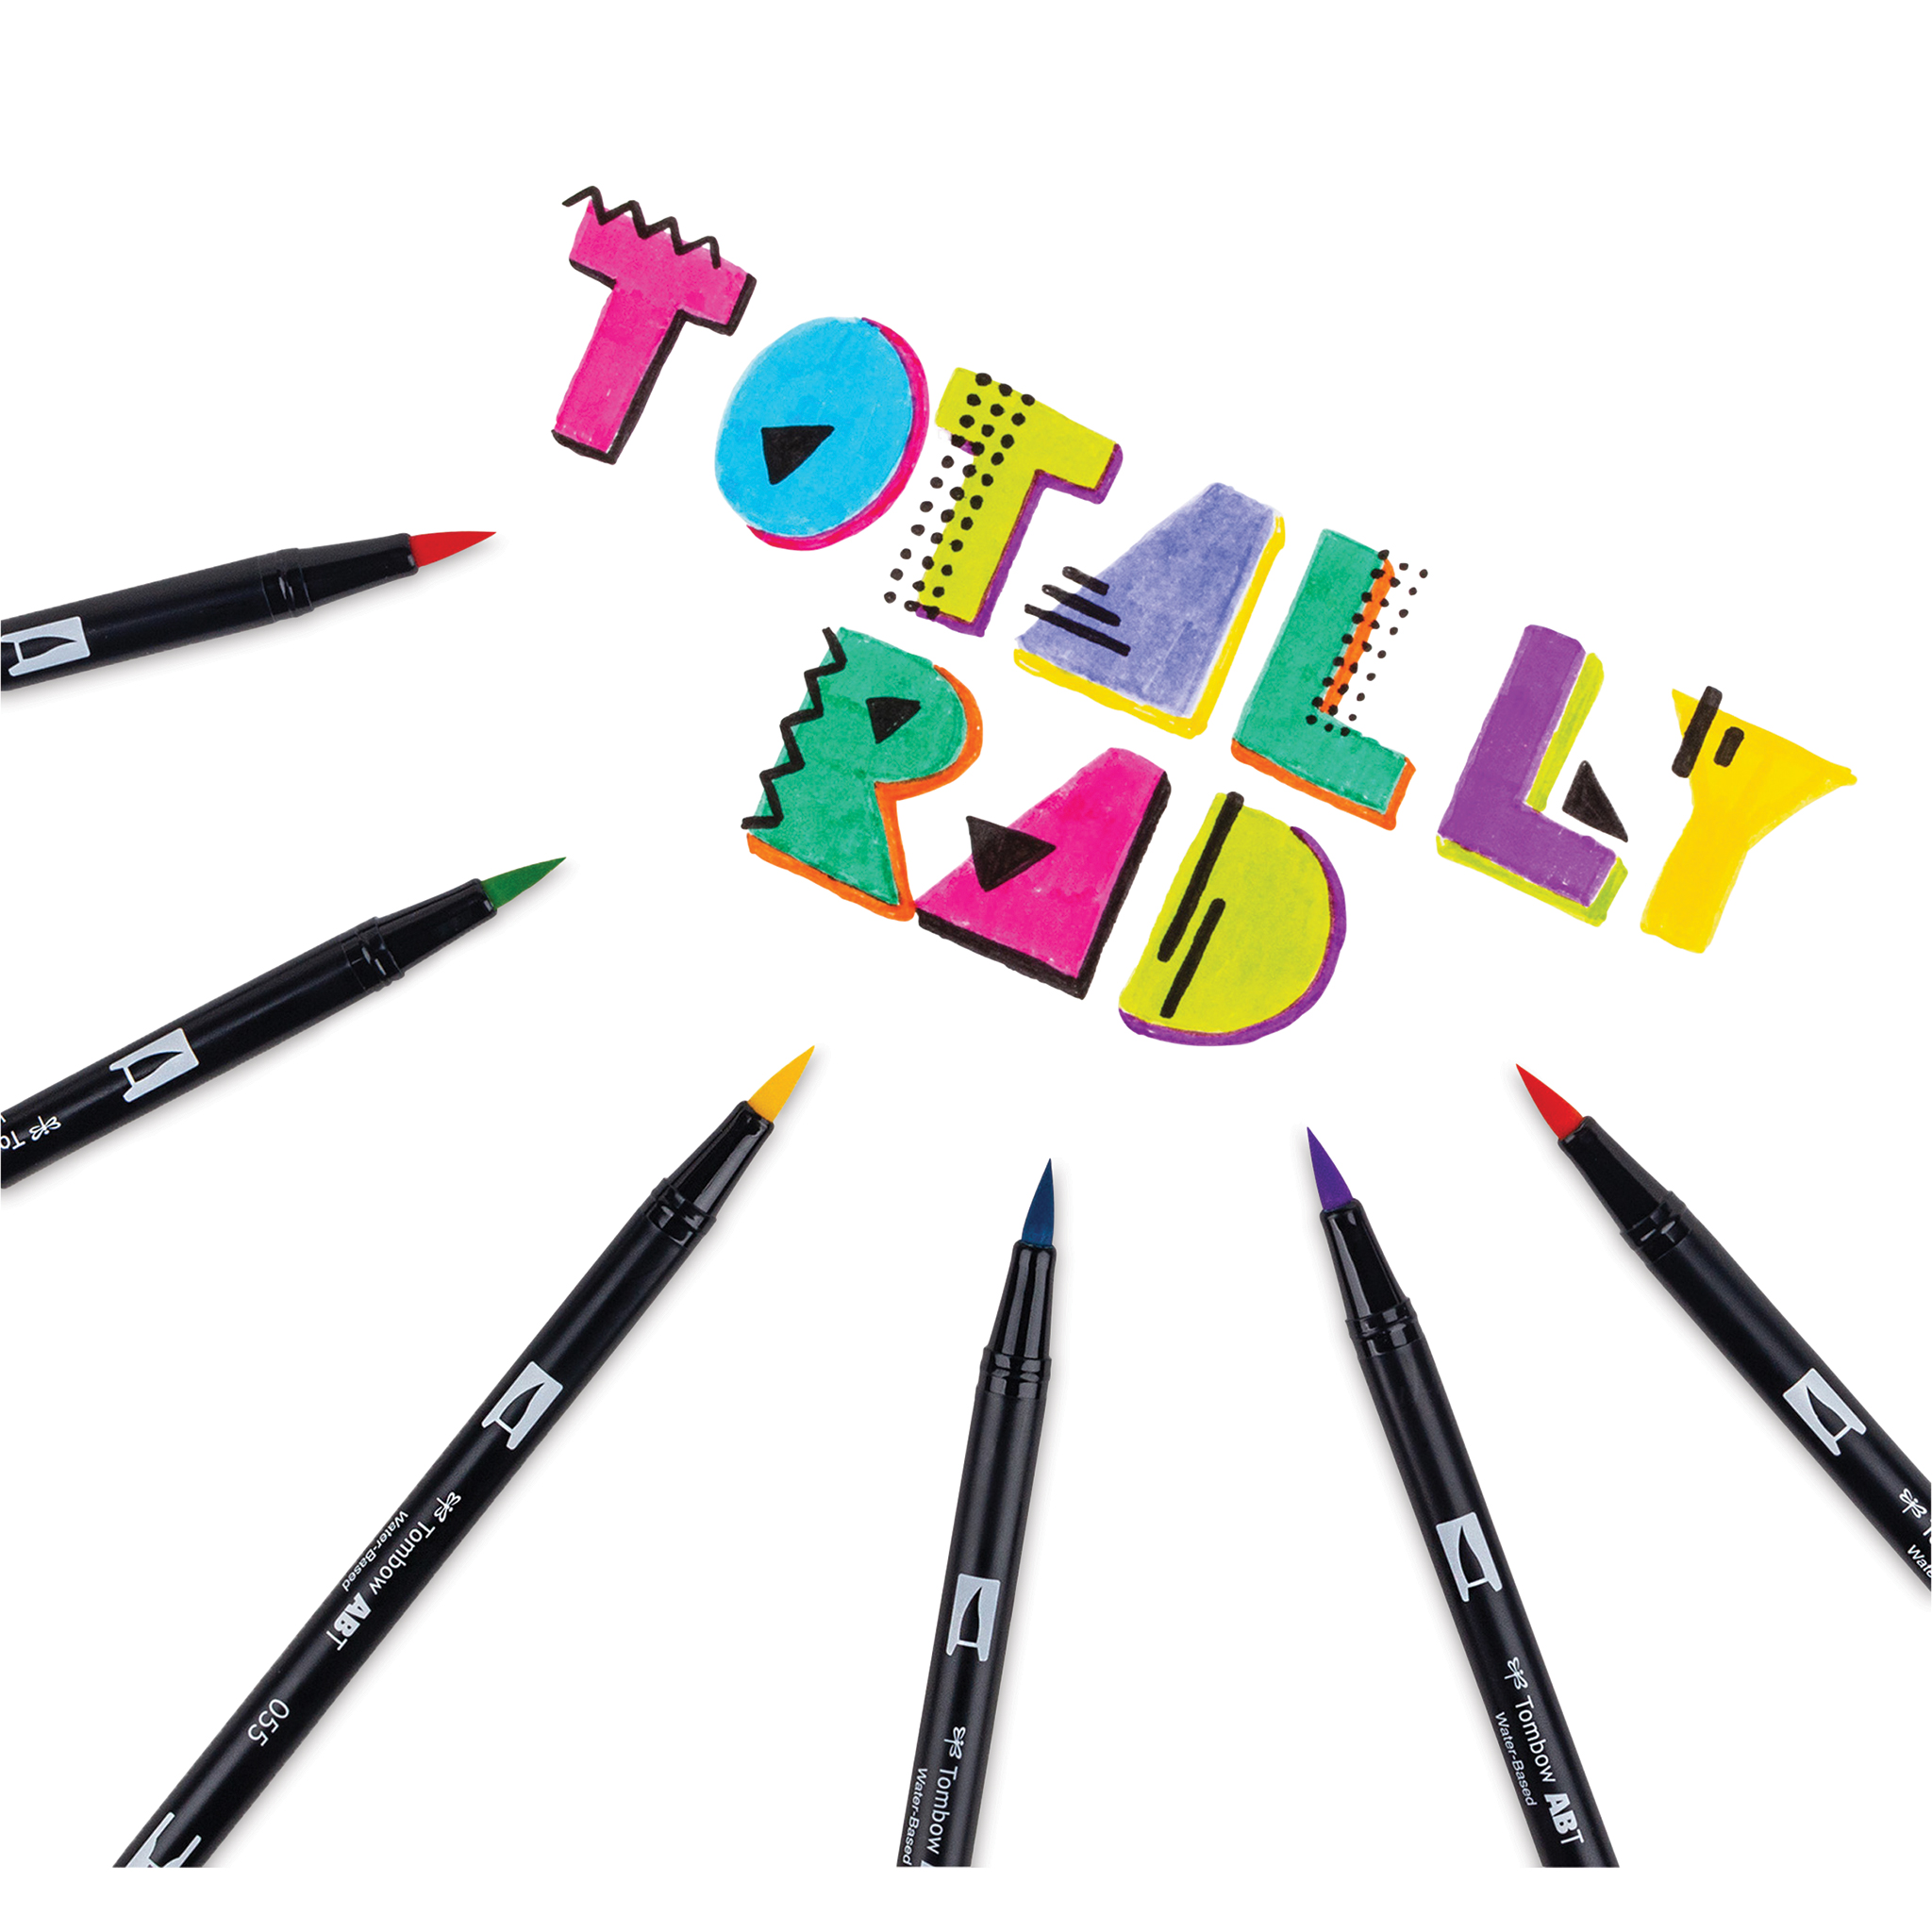 Tombow Dual Brush Pens- Eighties Set of 10